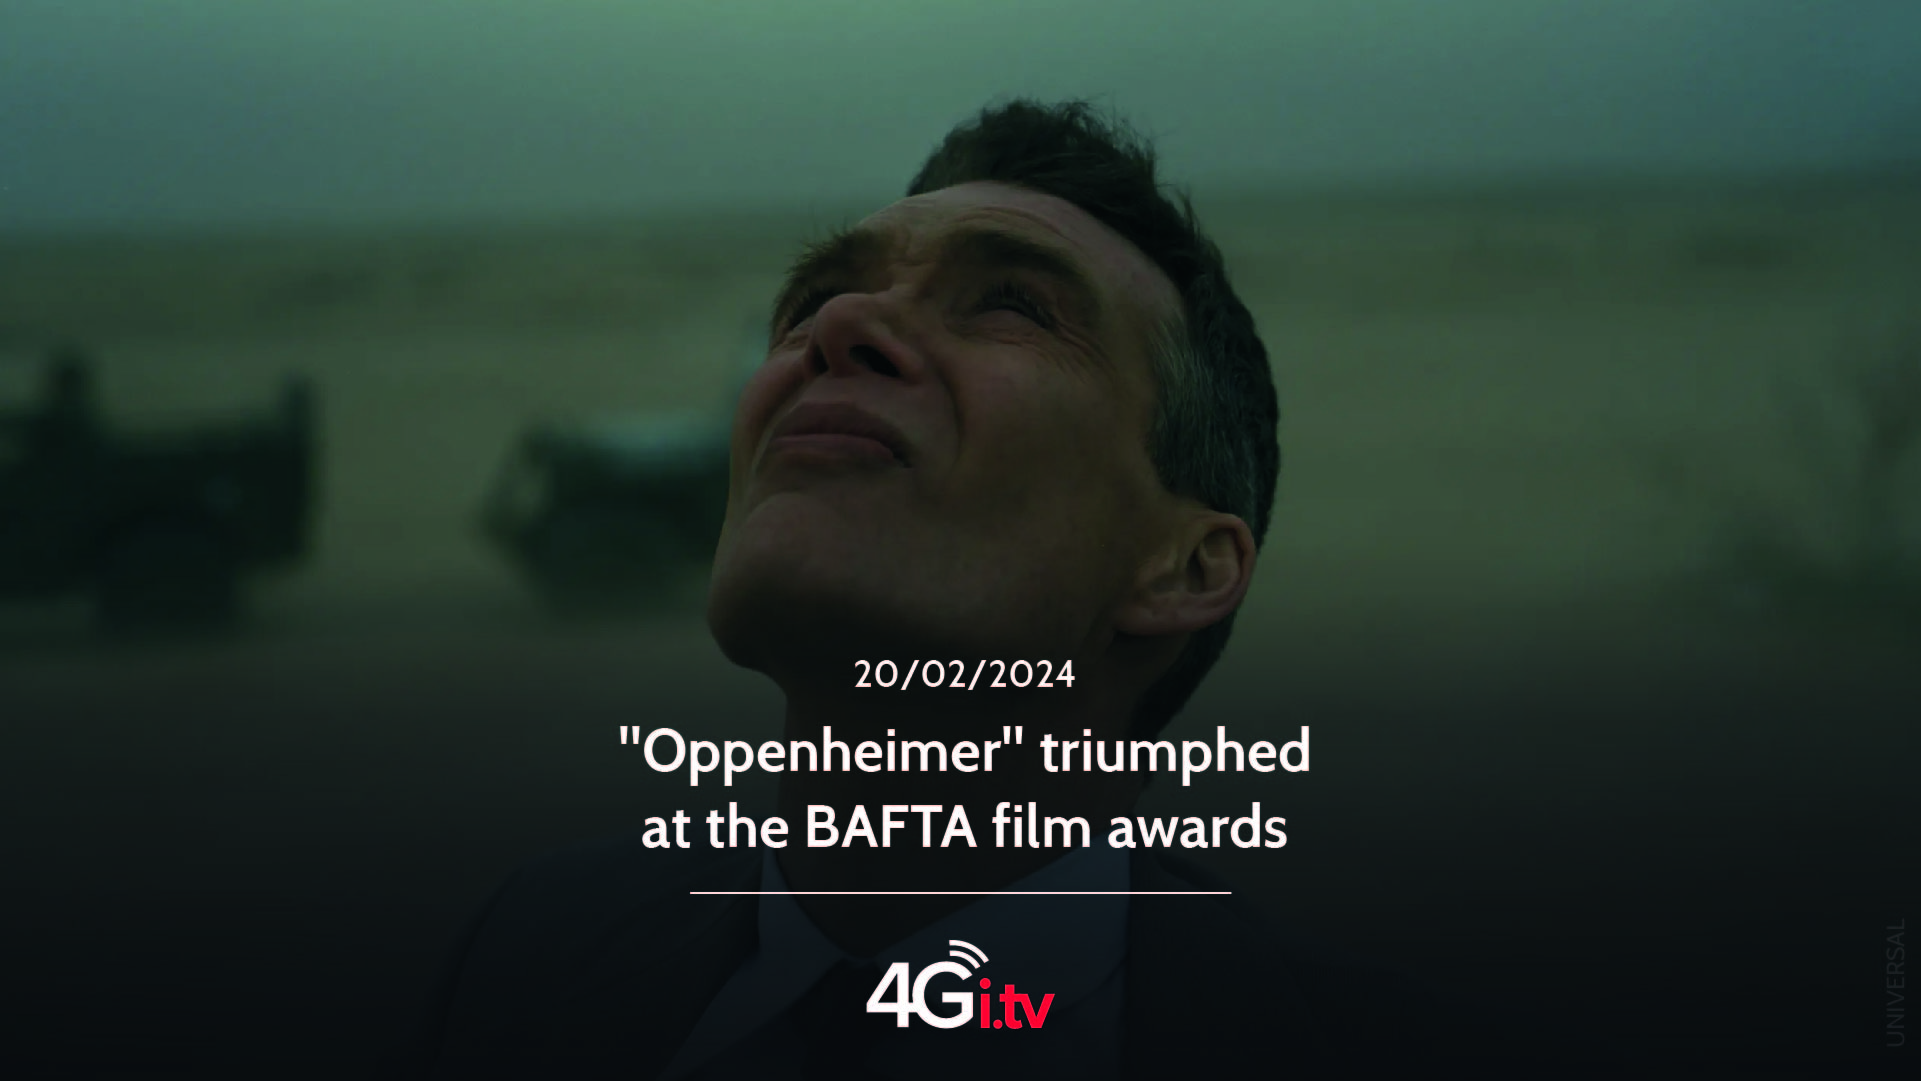 Подробнее о статье “Oppenheimer” triumphed at the BAFTA film awards